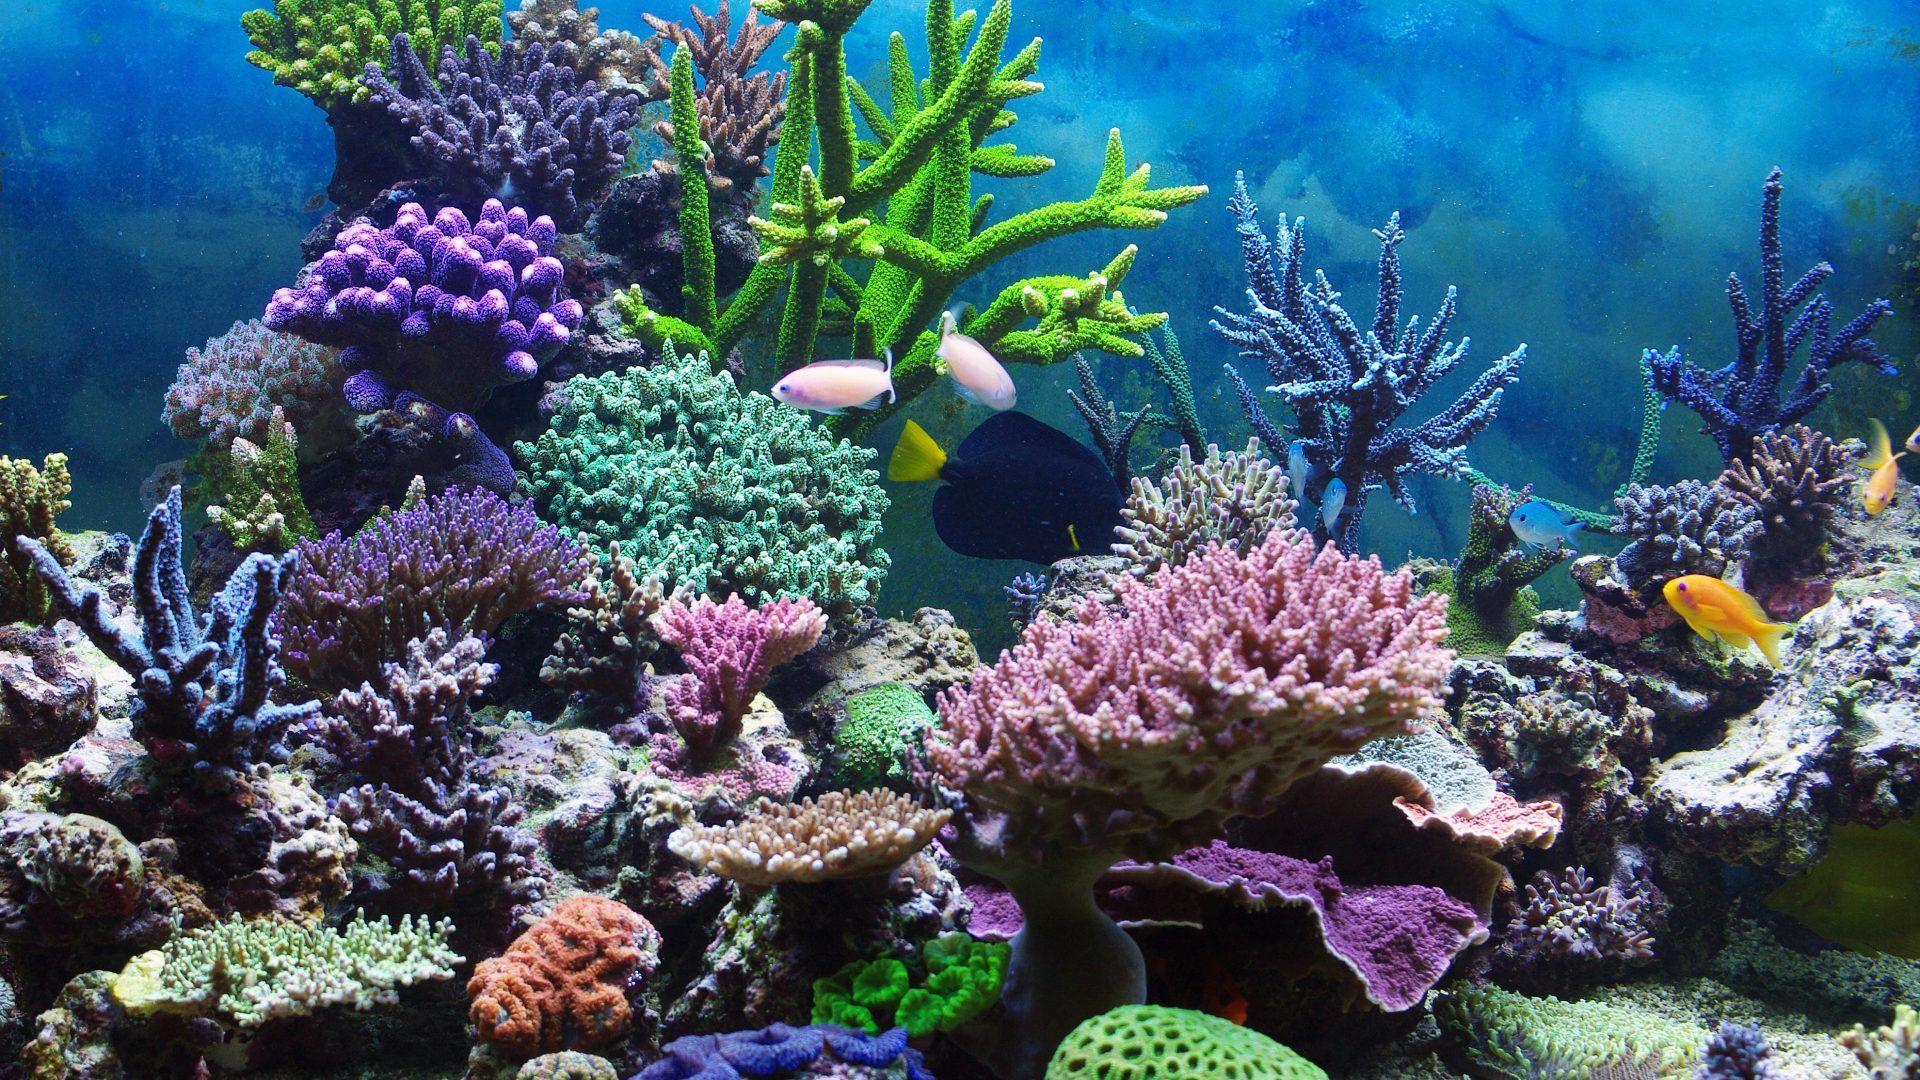 Coral Reefs wallpaper: Fish Plants Sea Reef Tropical Coral Desktop